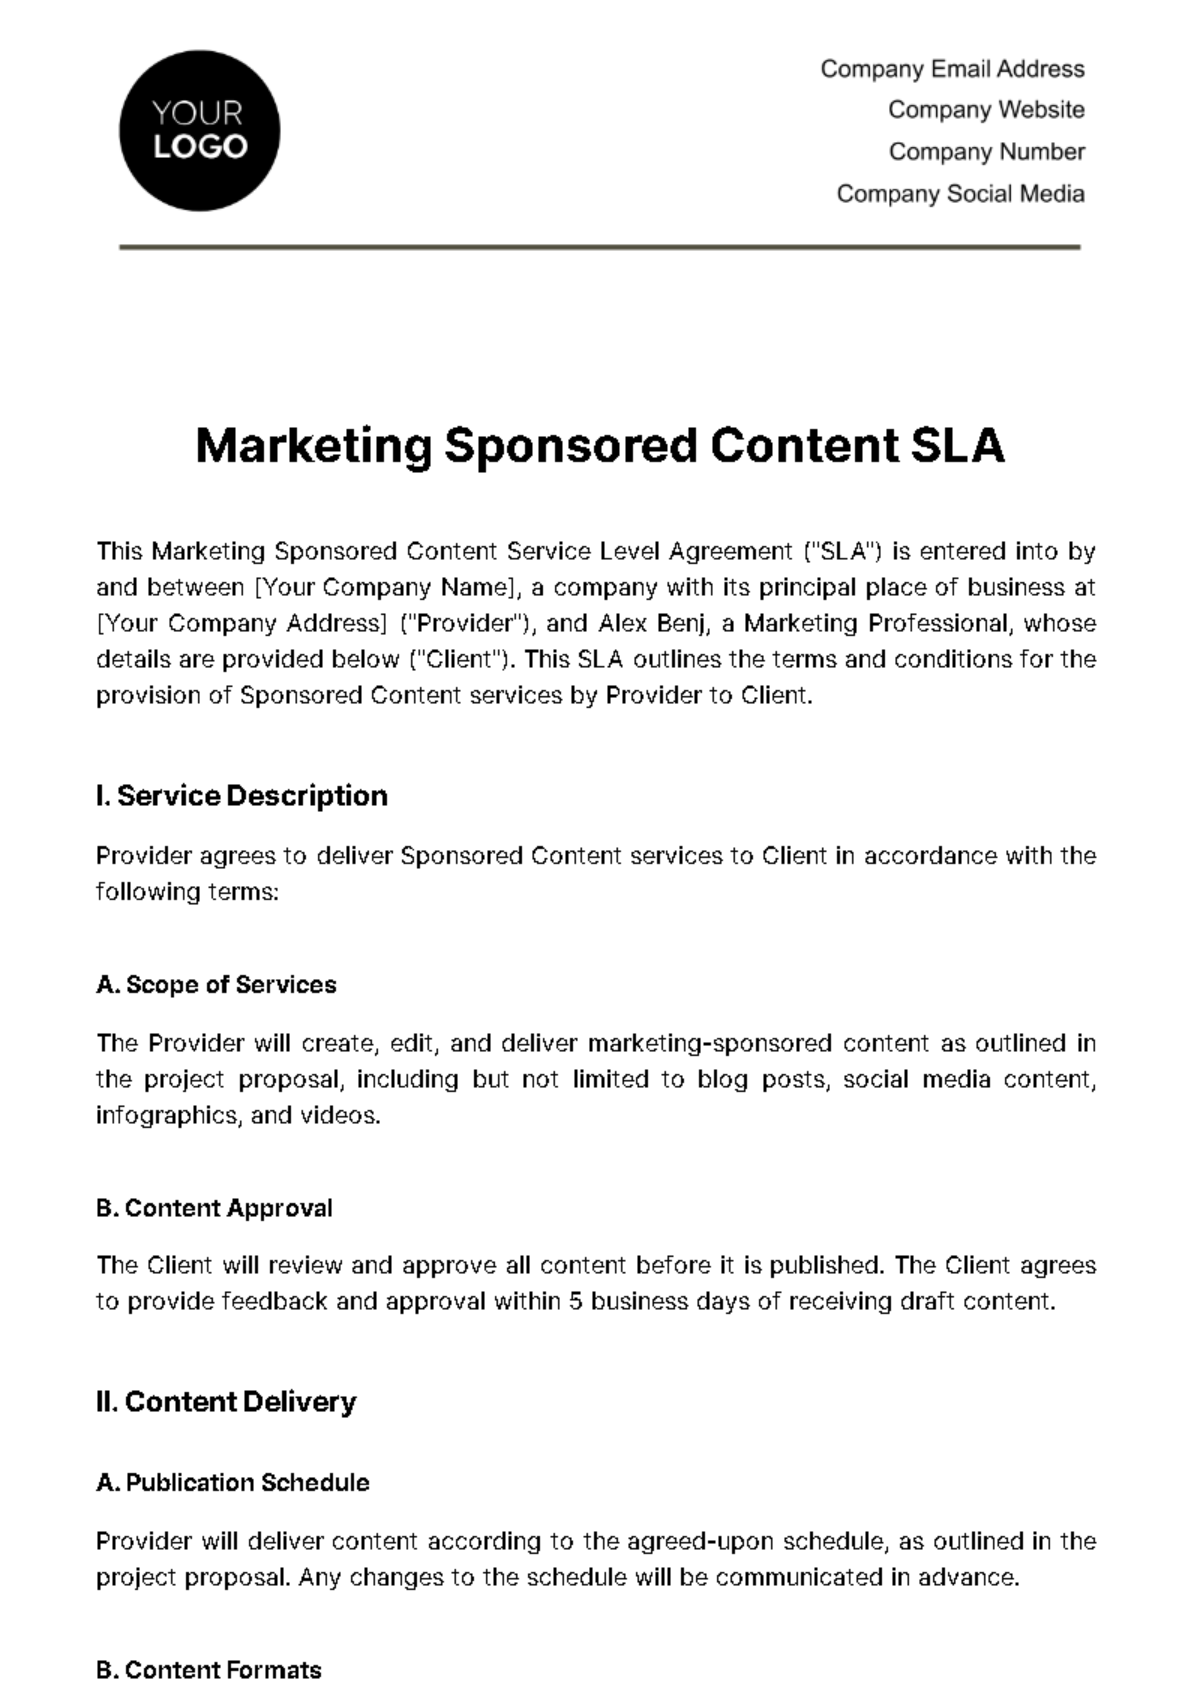 Marketing Sponsored Content SLA Template